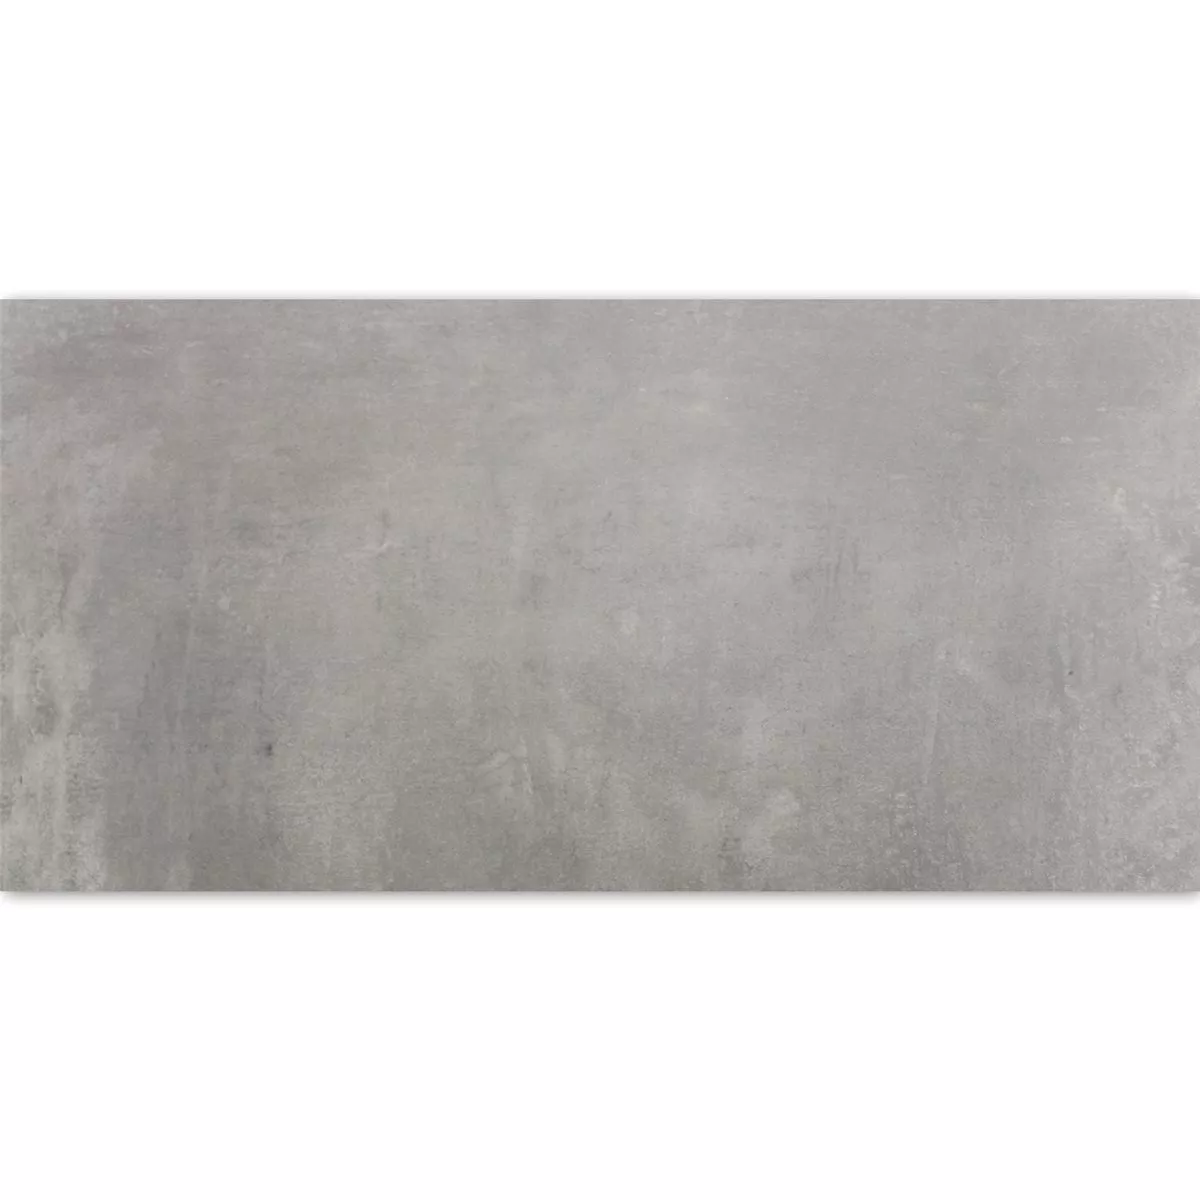 Muster Bodenfliesen Etna Hellgrau Glasiert 30x60cm